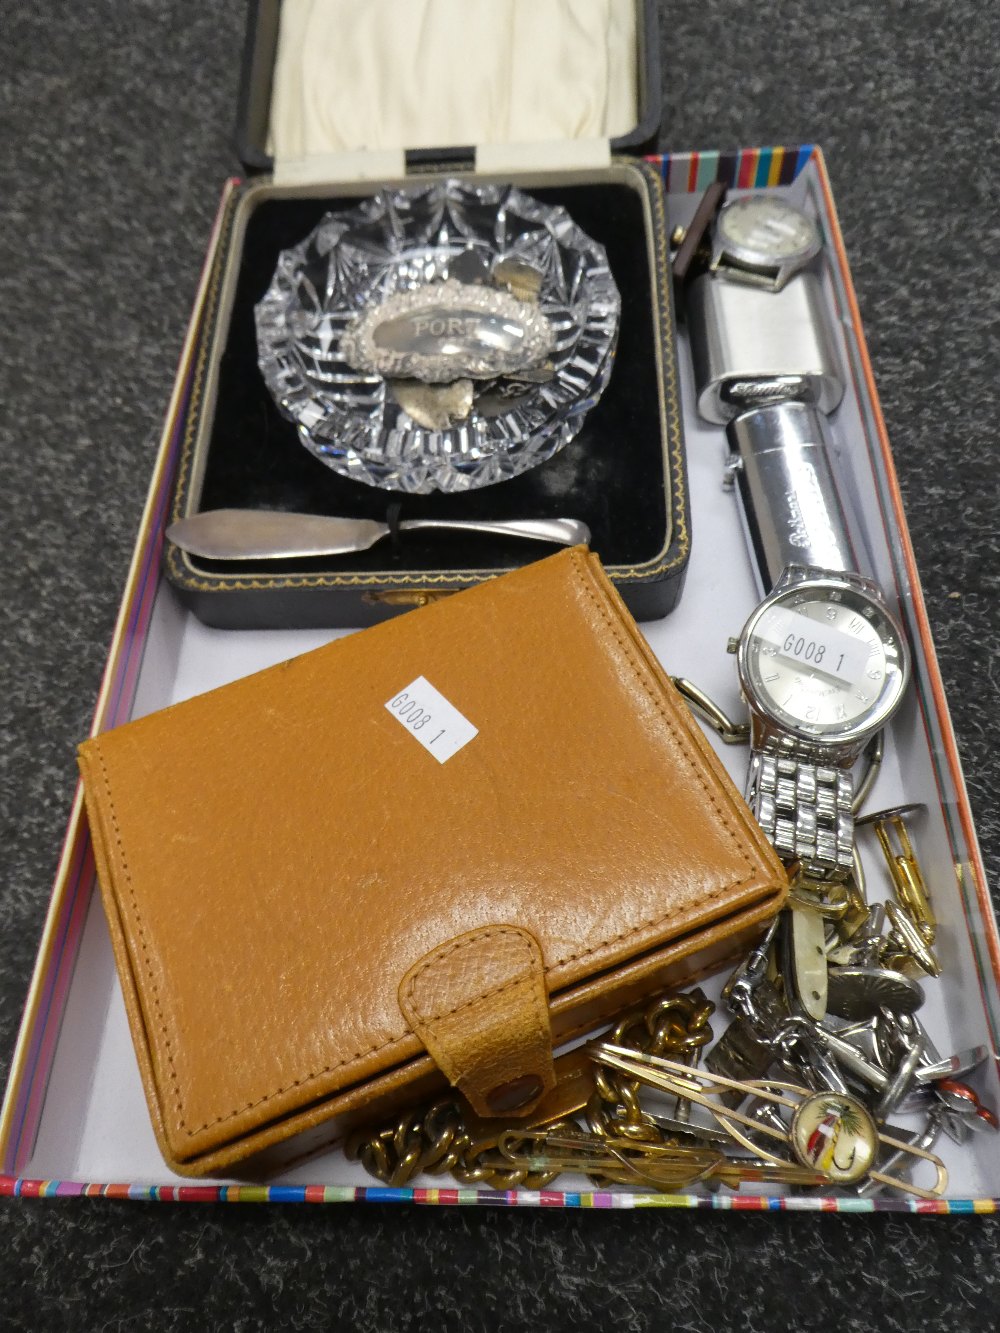 Silver 'PORT' label, 2 pairs of Silver cufflinks, vintage cufflinks, watches etc.